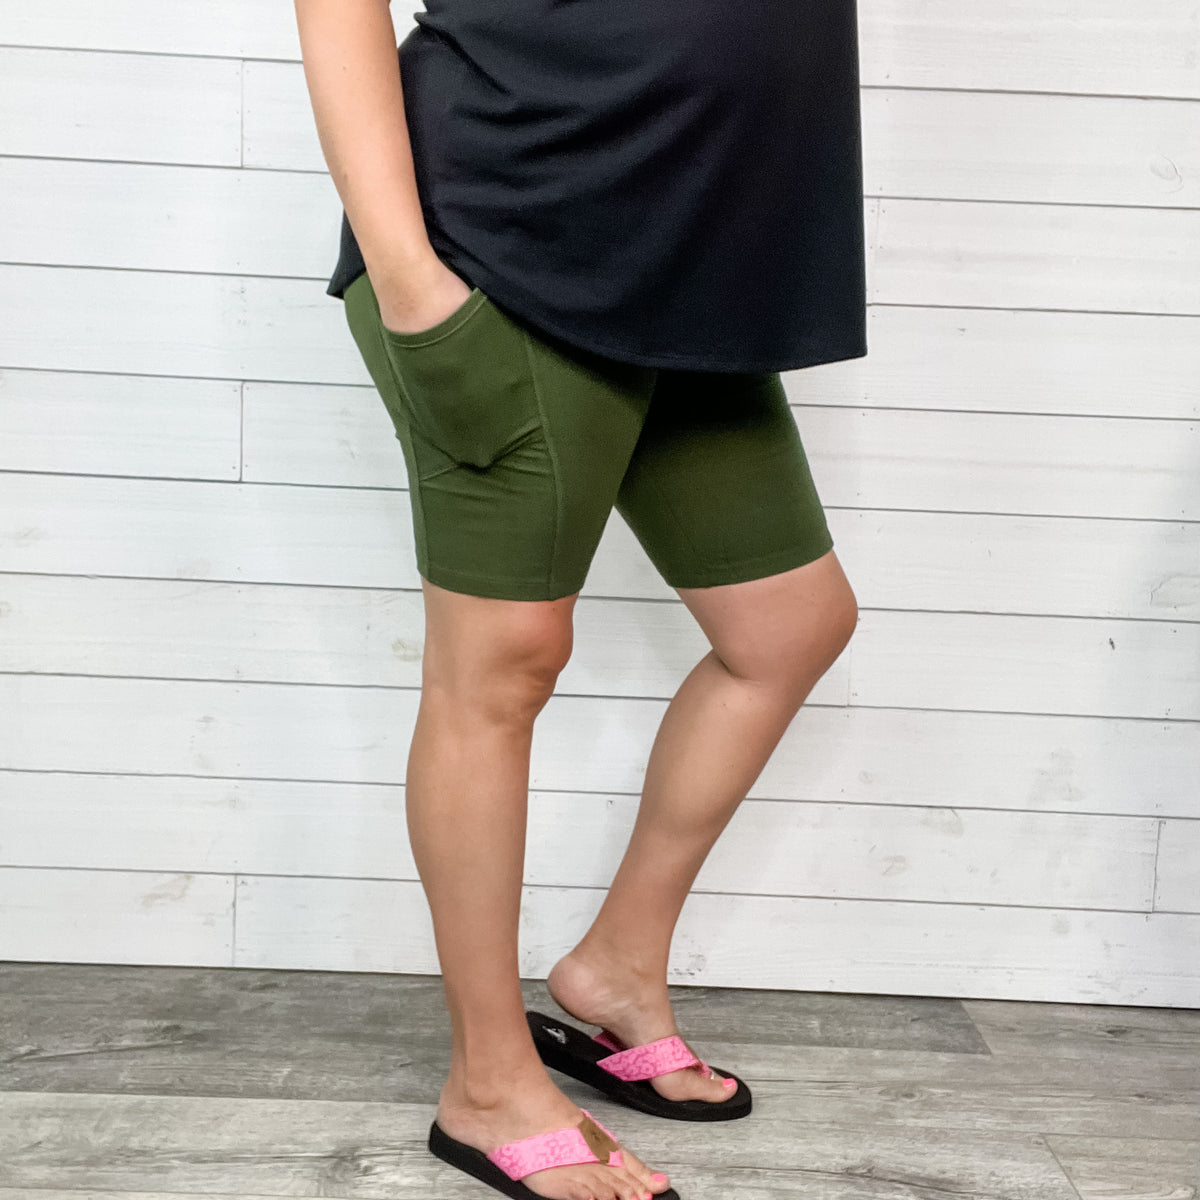 Cotton No Chub Rub Bike Shorts with Pockets (Army Green)